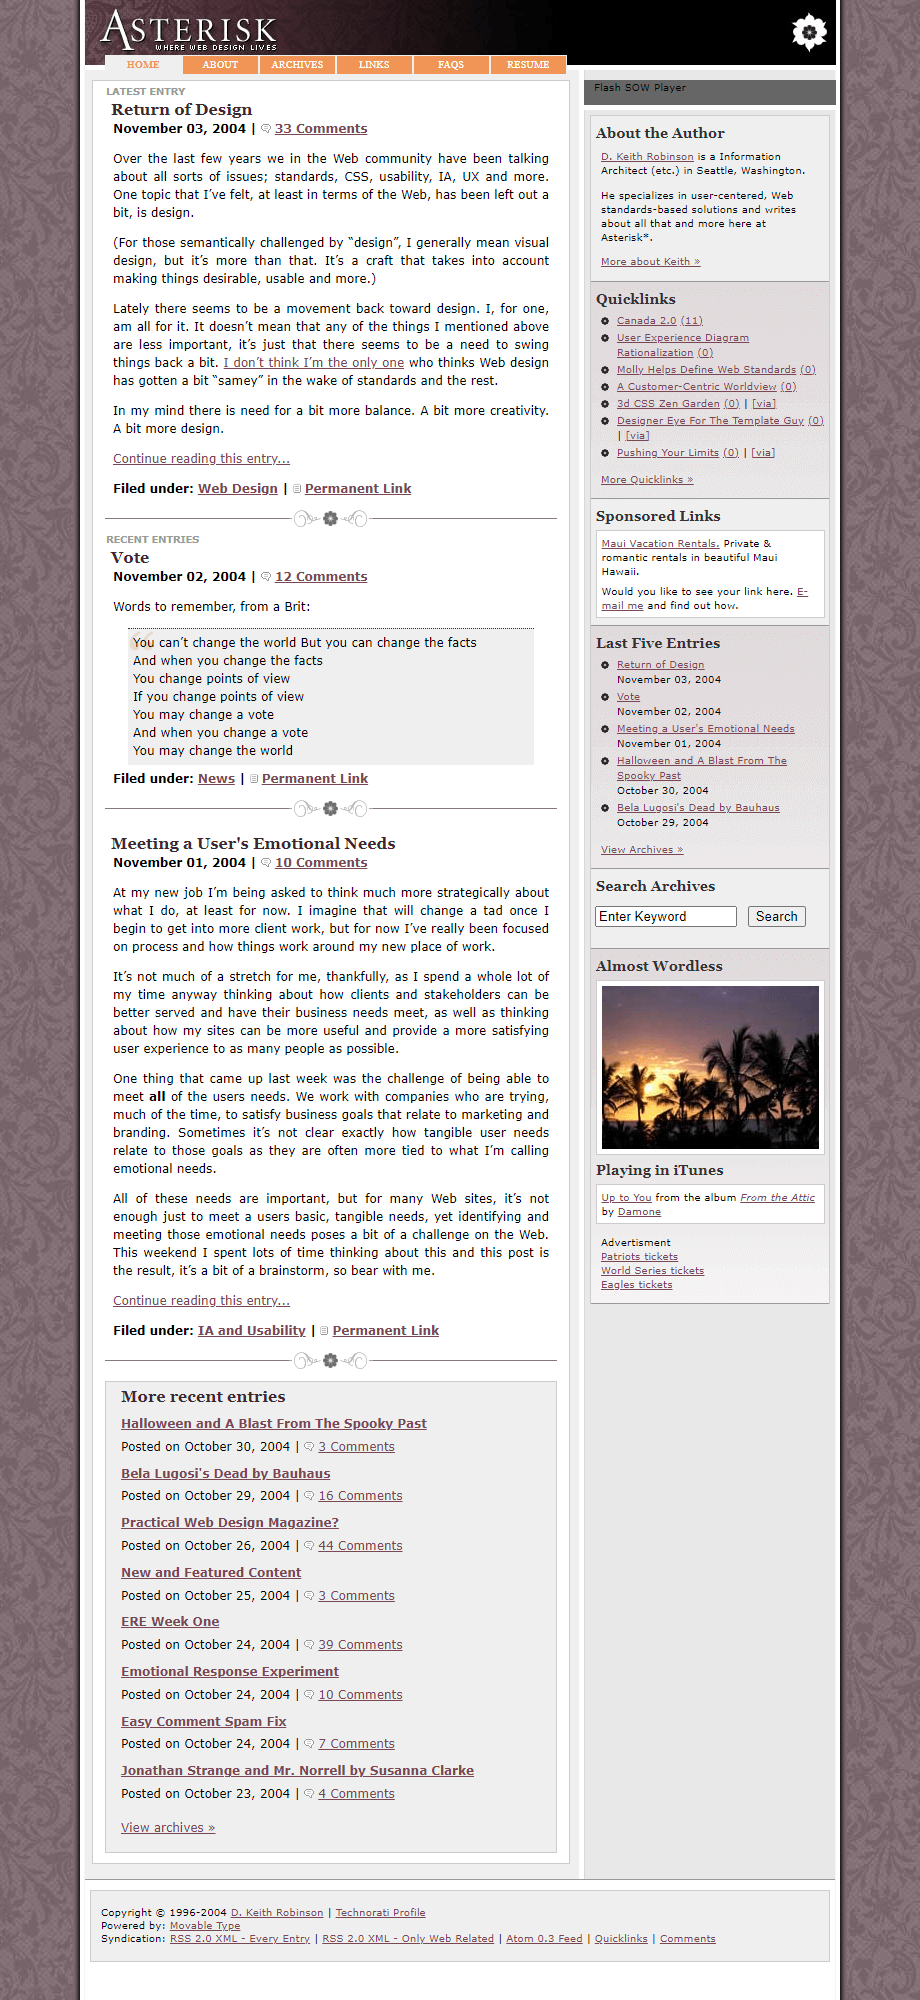 Asterisk website in 2004